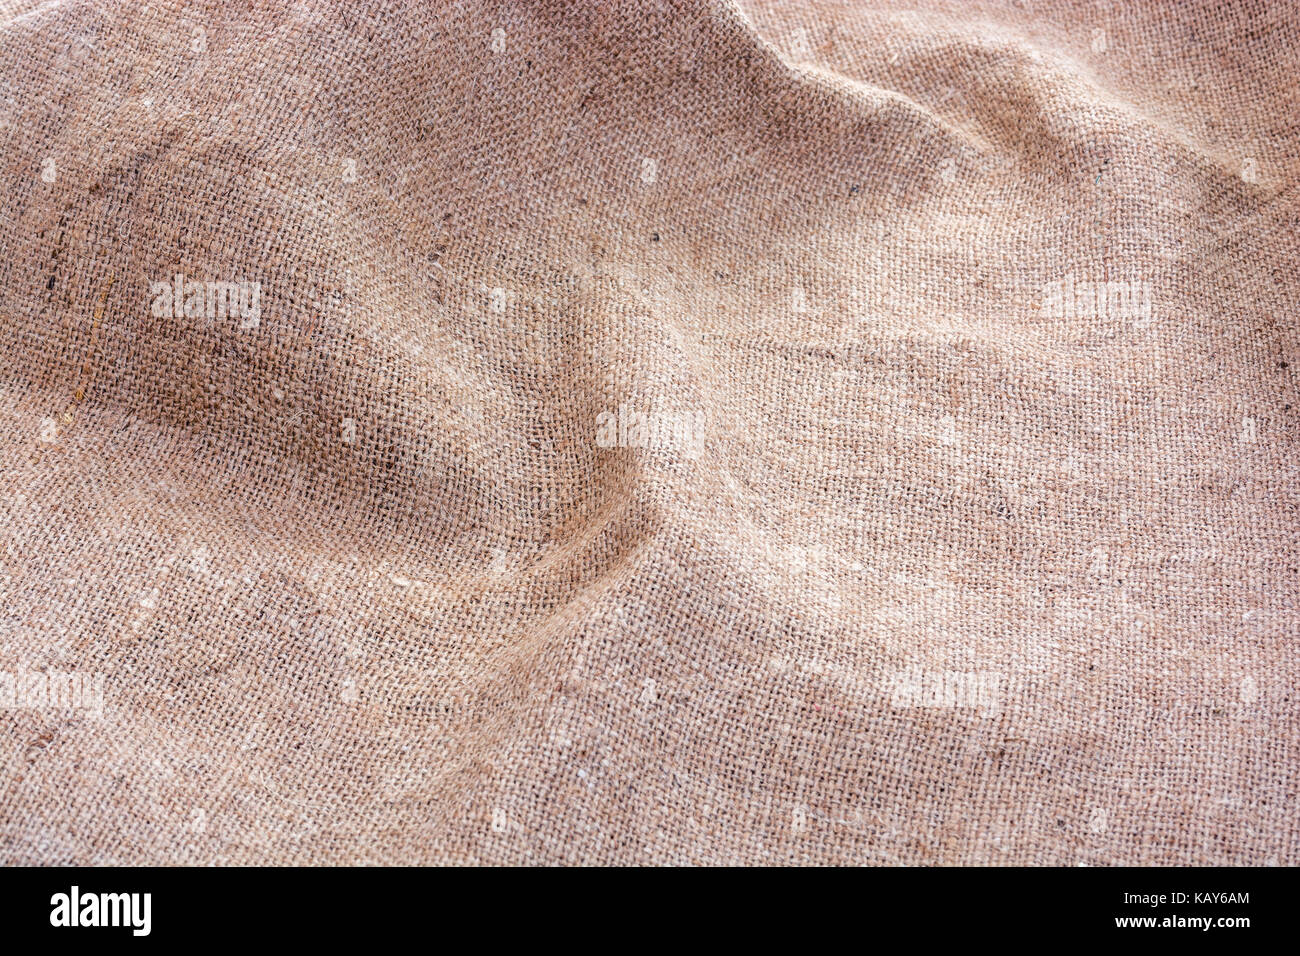 Arrugado saco de arpillera o tela de saco de yute, el enfoque selectivo Foto de stock